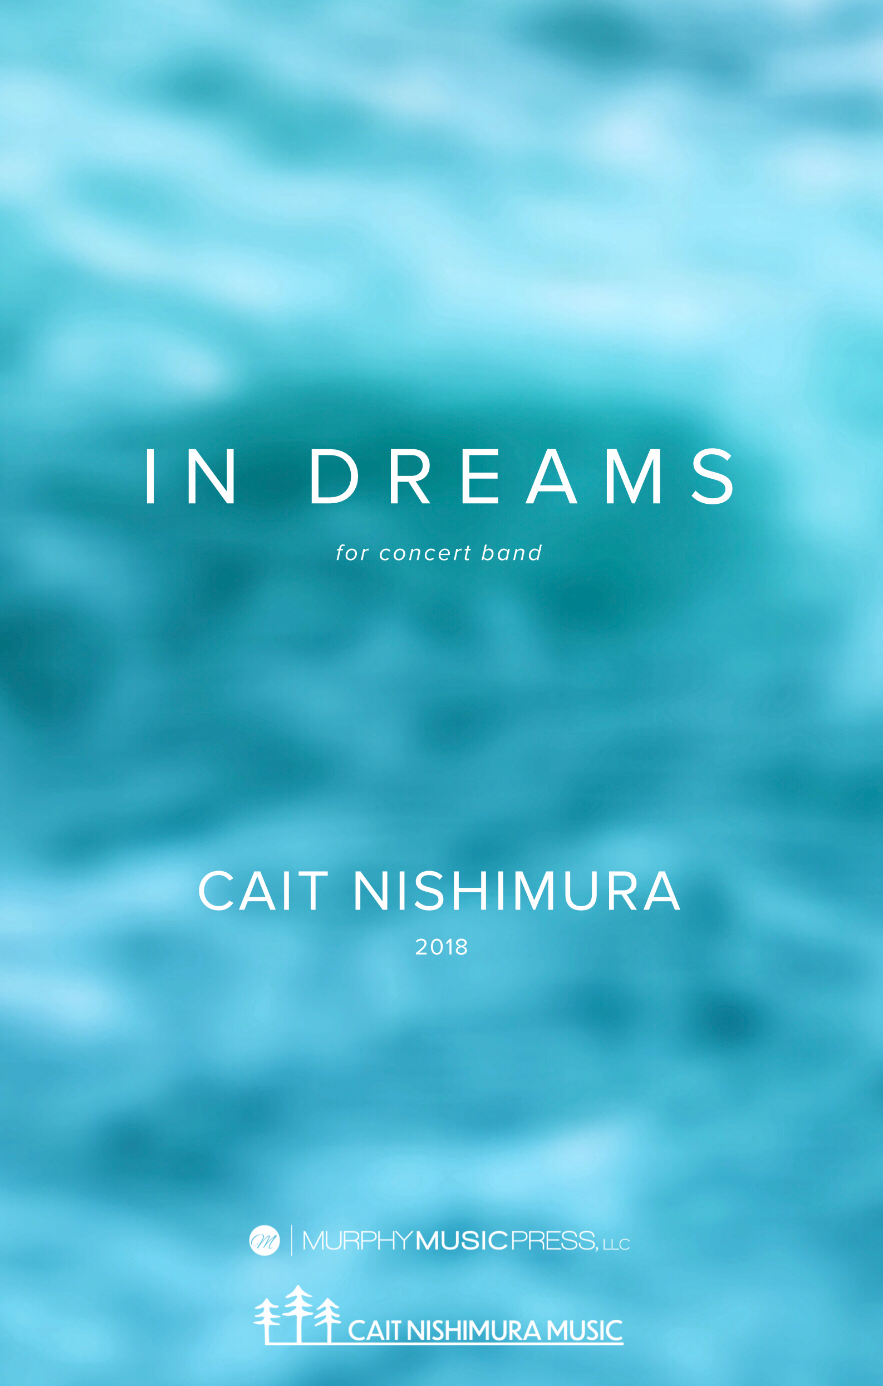 In Dreams by Cait Nishimura